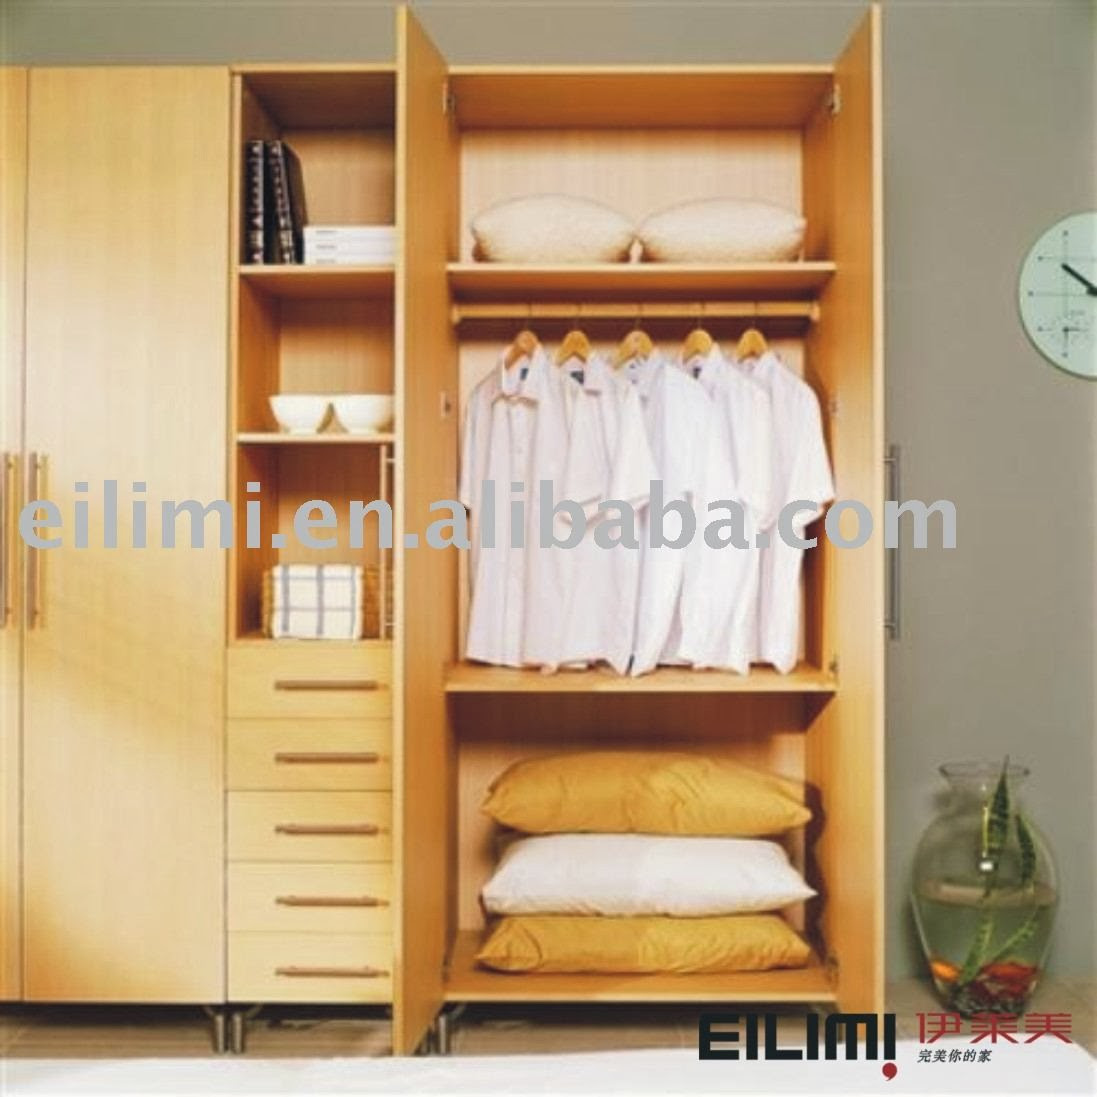 Bedroom Cabinet Ideas
 IKEA Small Bedroom Design Ideas